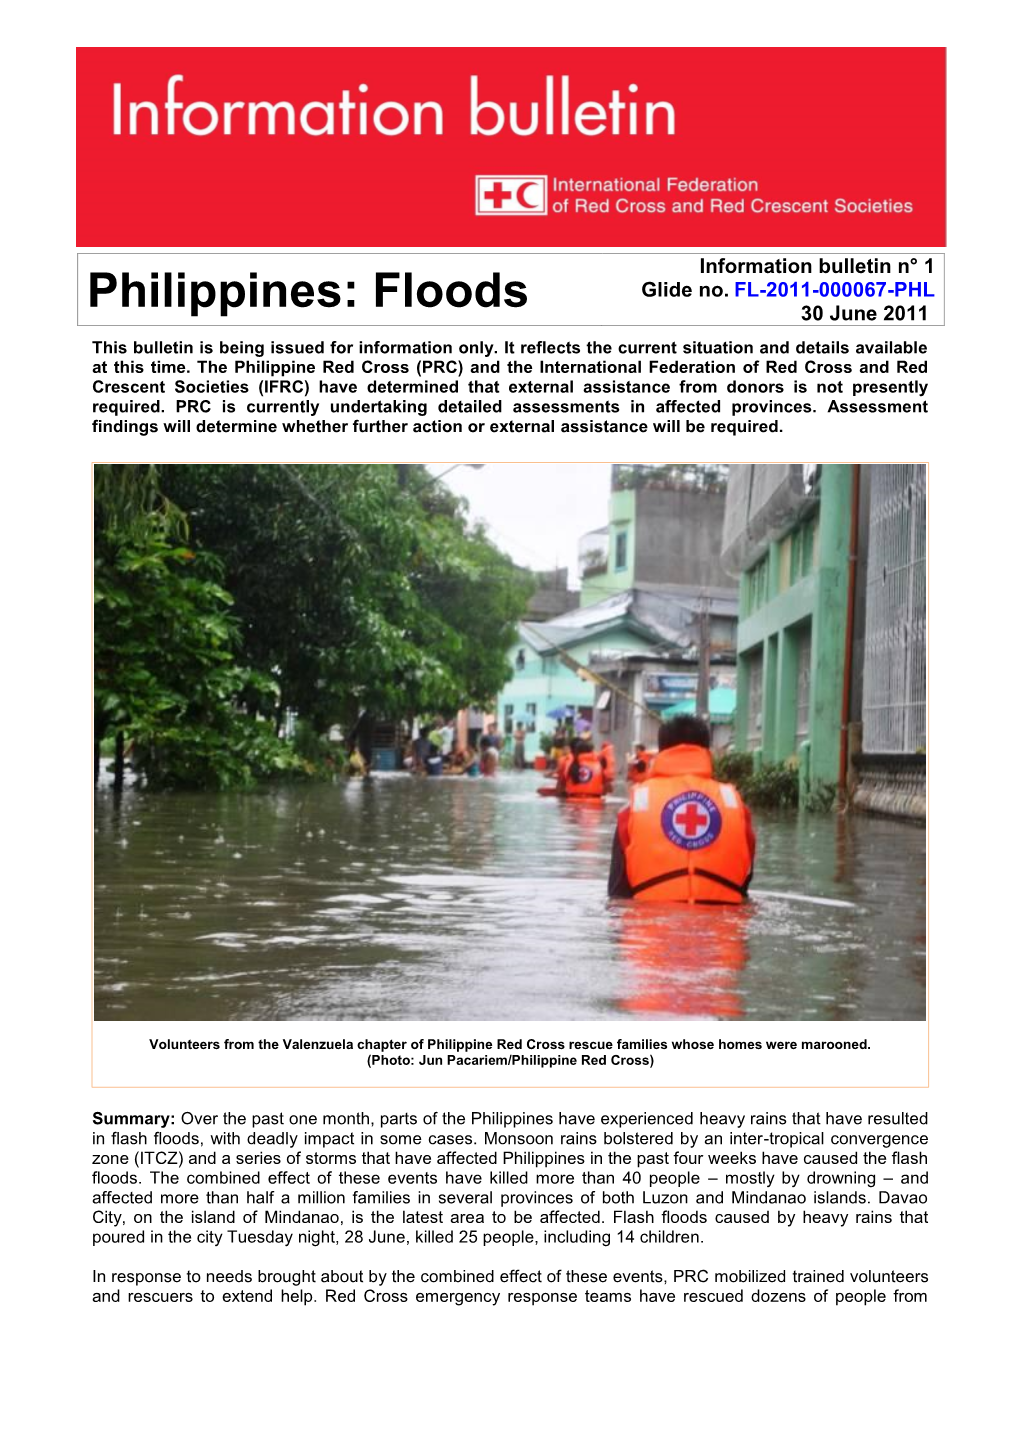 Philippines: Floods 30 June 2011